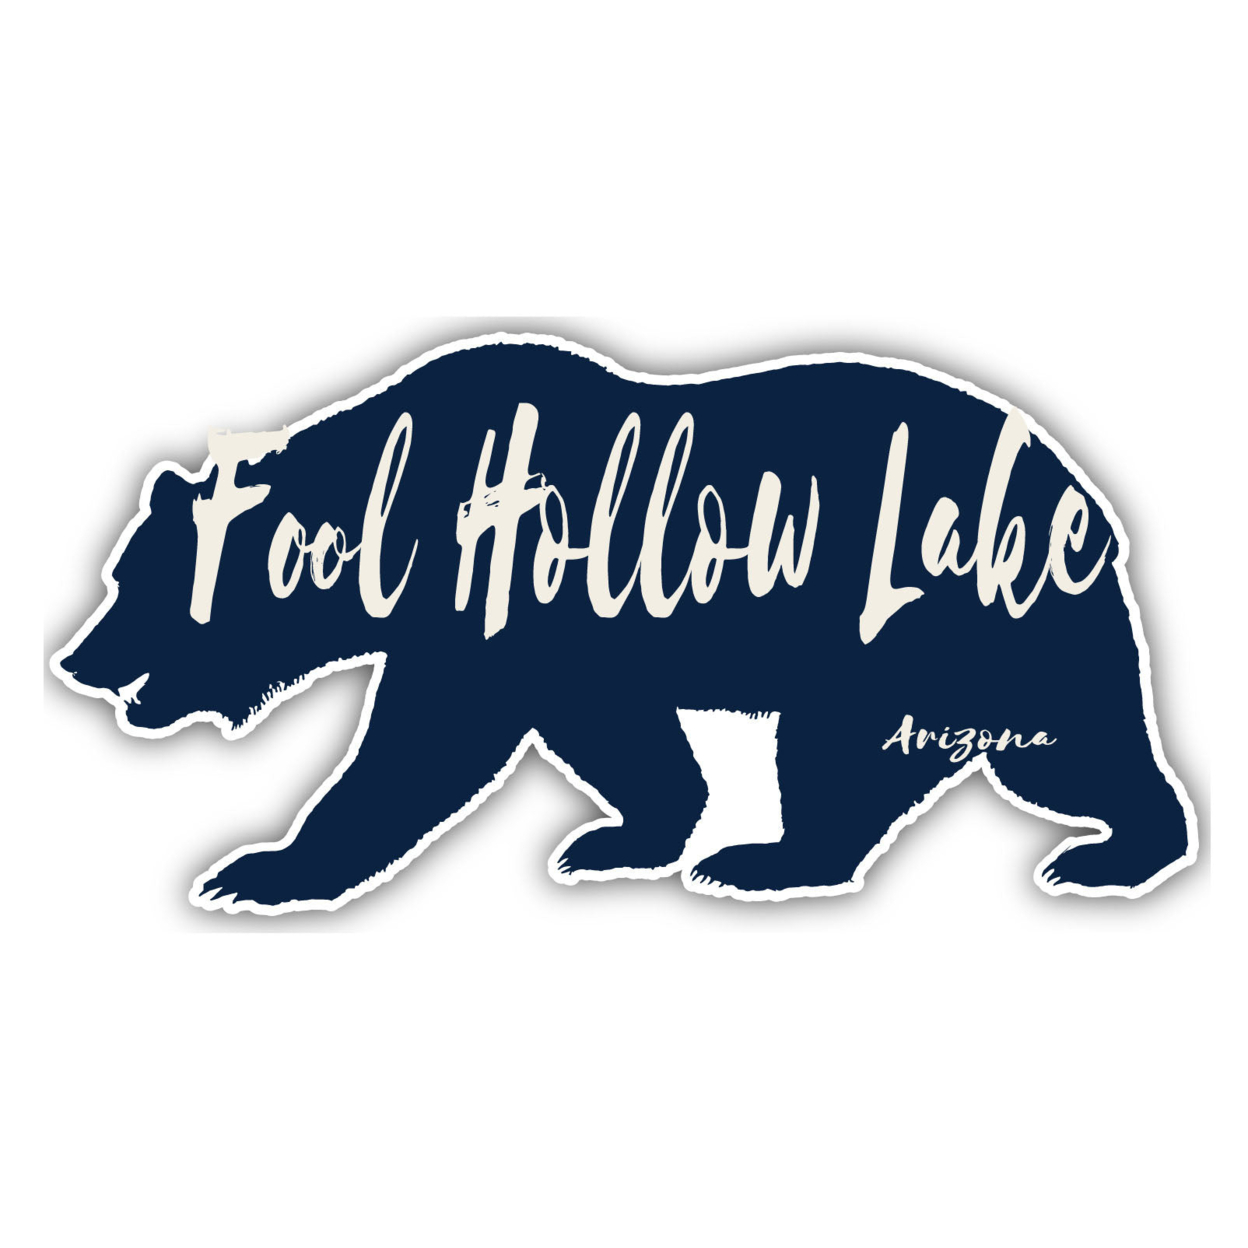 Fool Hollow Lake Arizona Souvenir Decorative Stickers (Choose Theme And Size) - Single Unit, 12-Inch, Tent